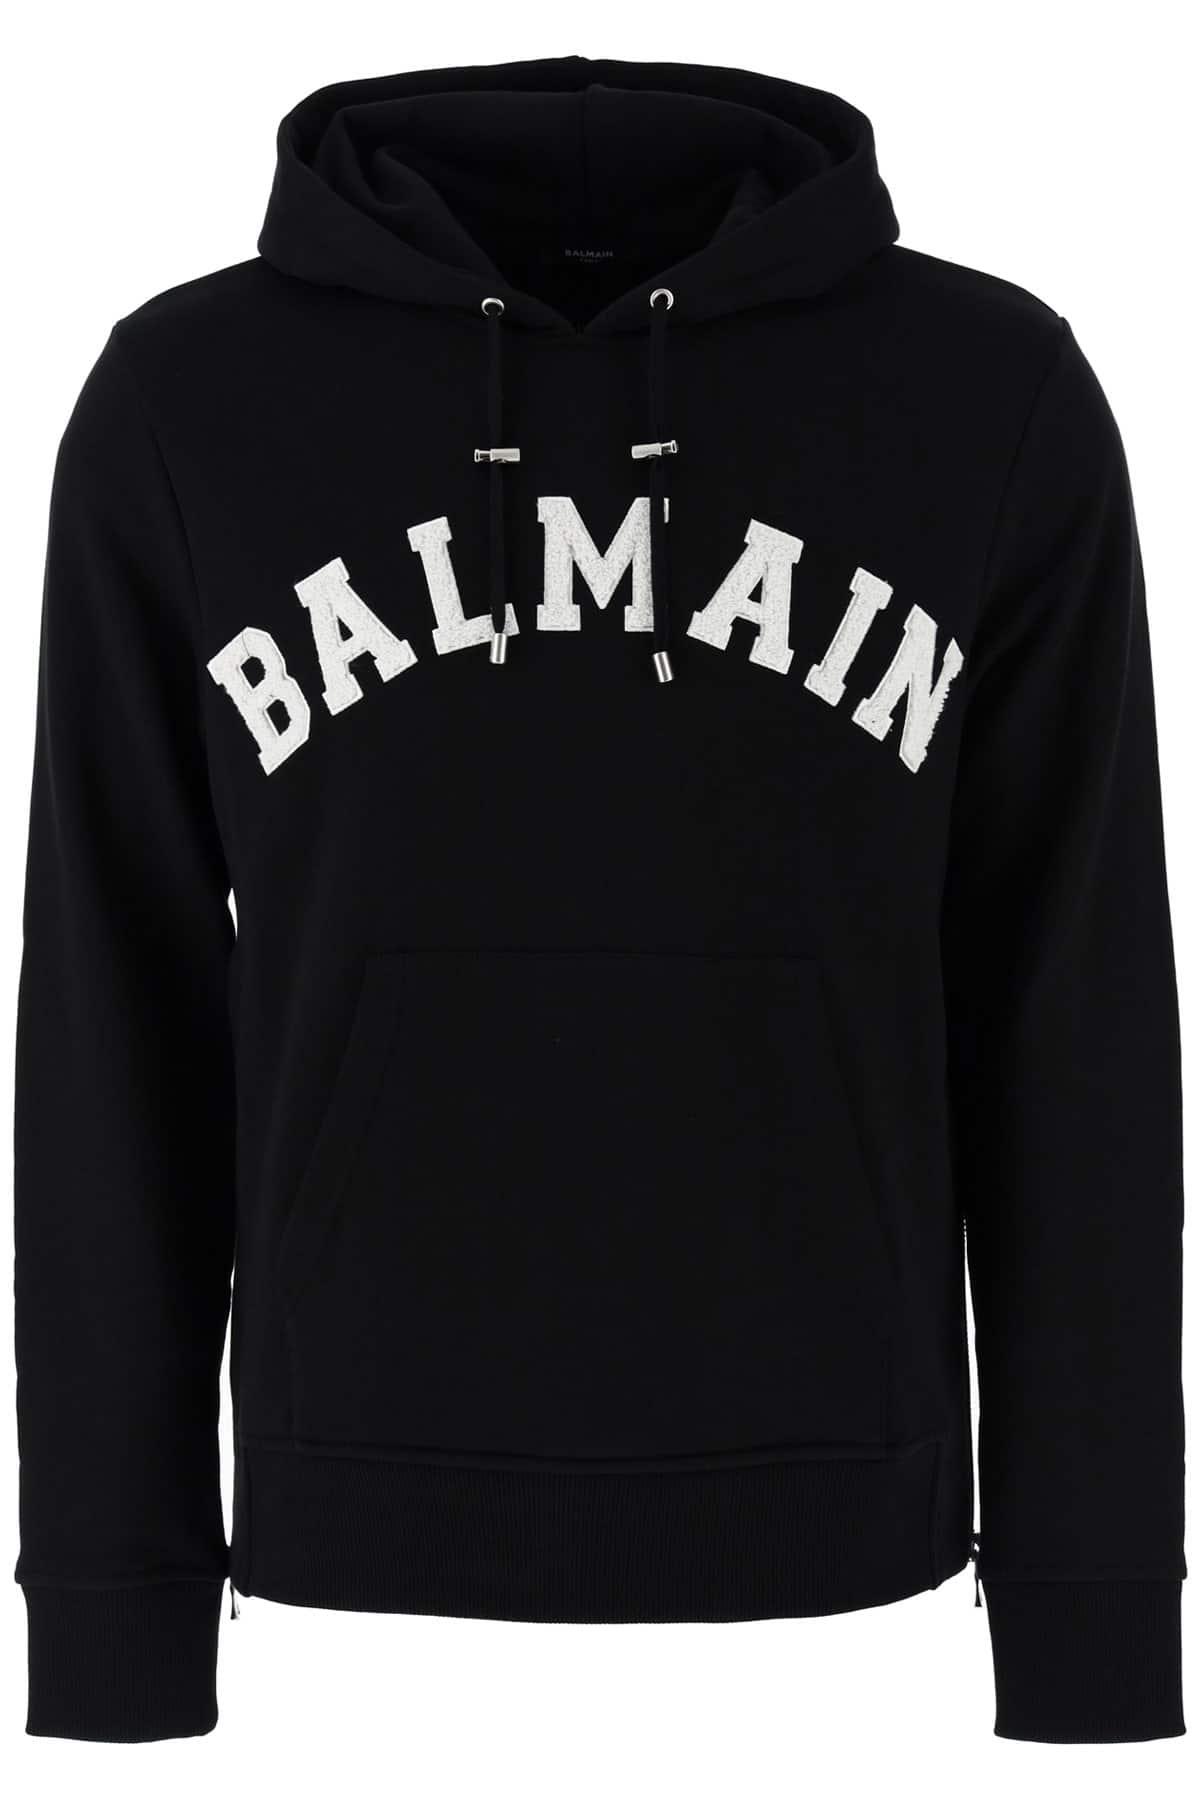 Balmain Cotton Logo Hoodie in Black,White (Black) for Men - Lyst